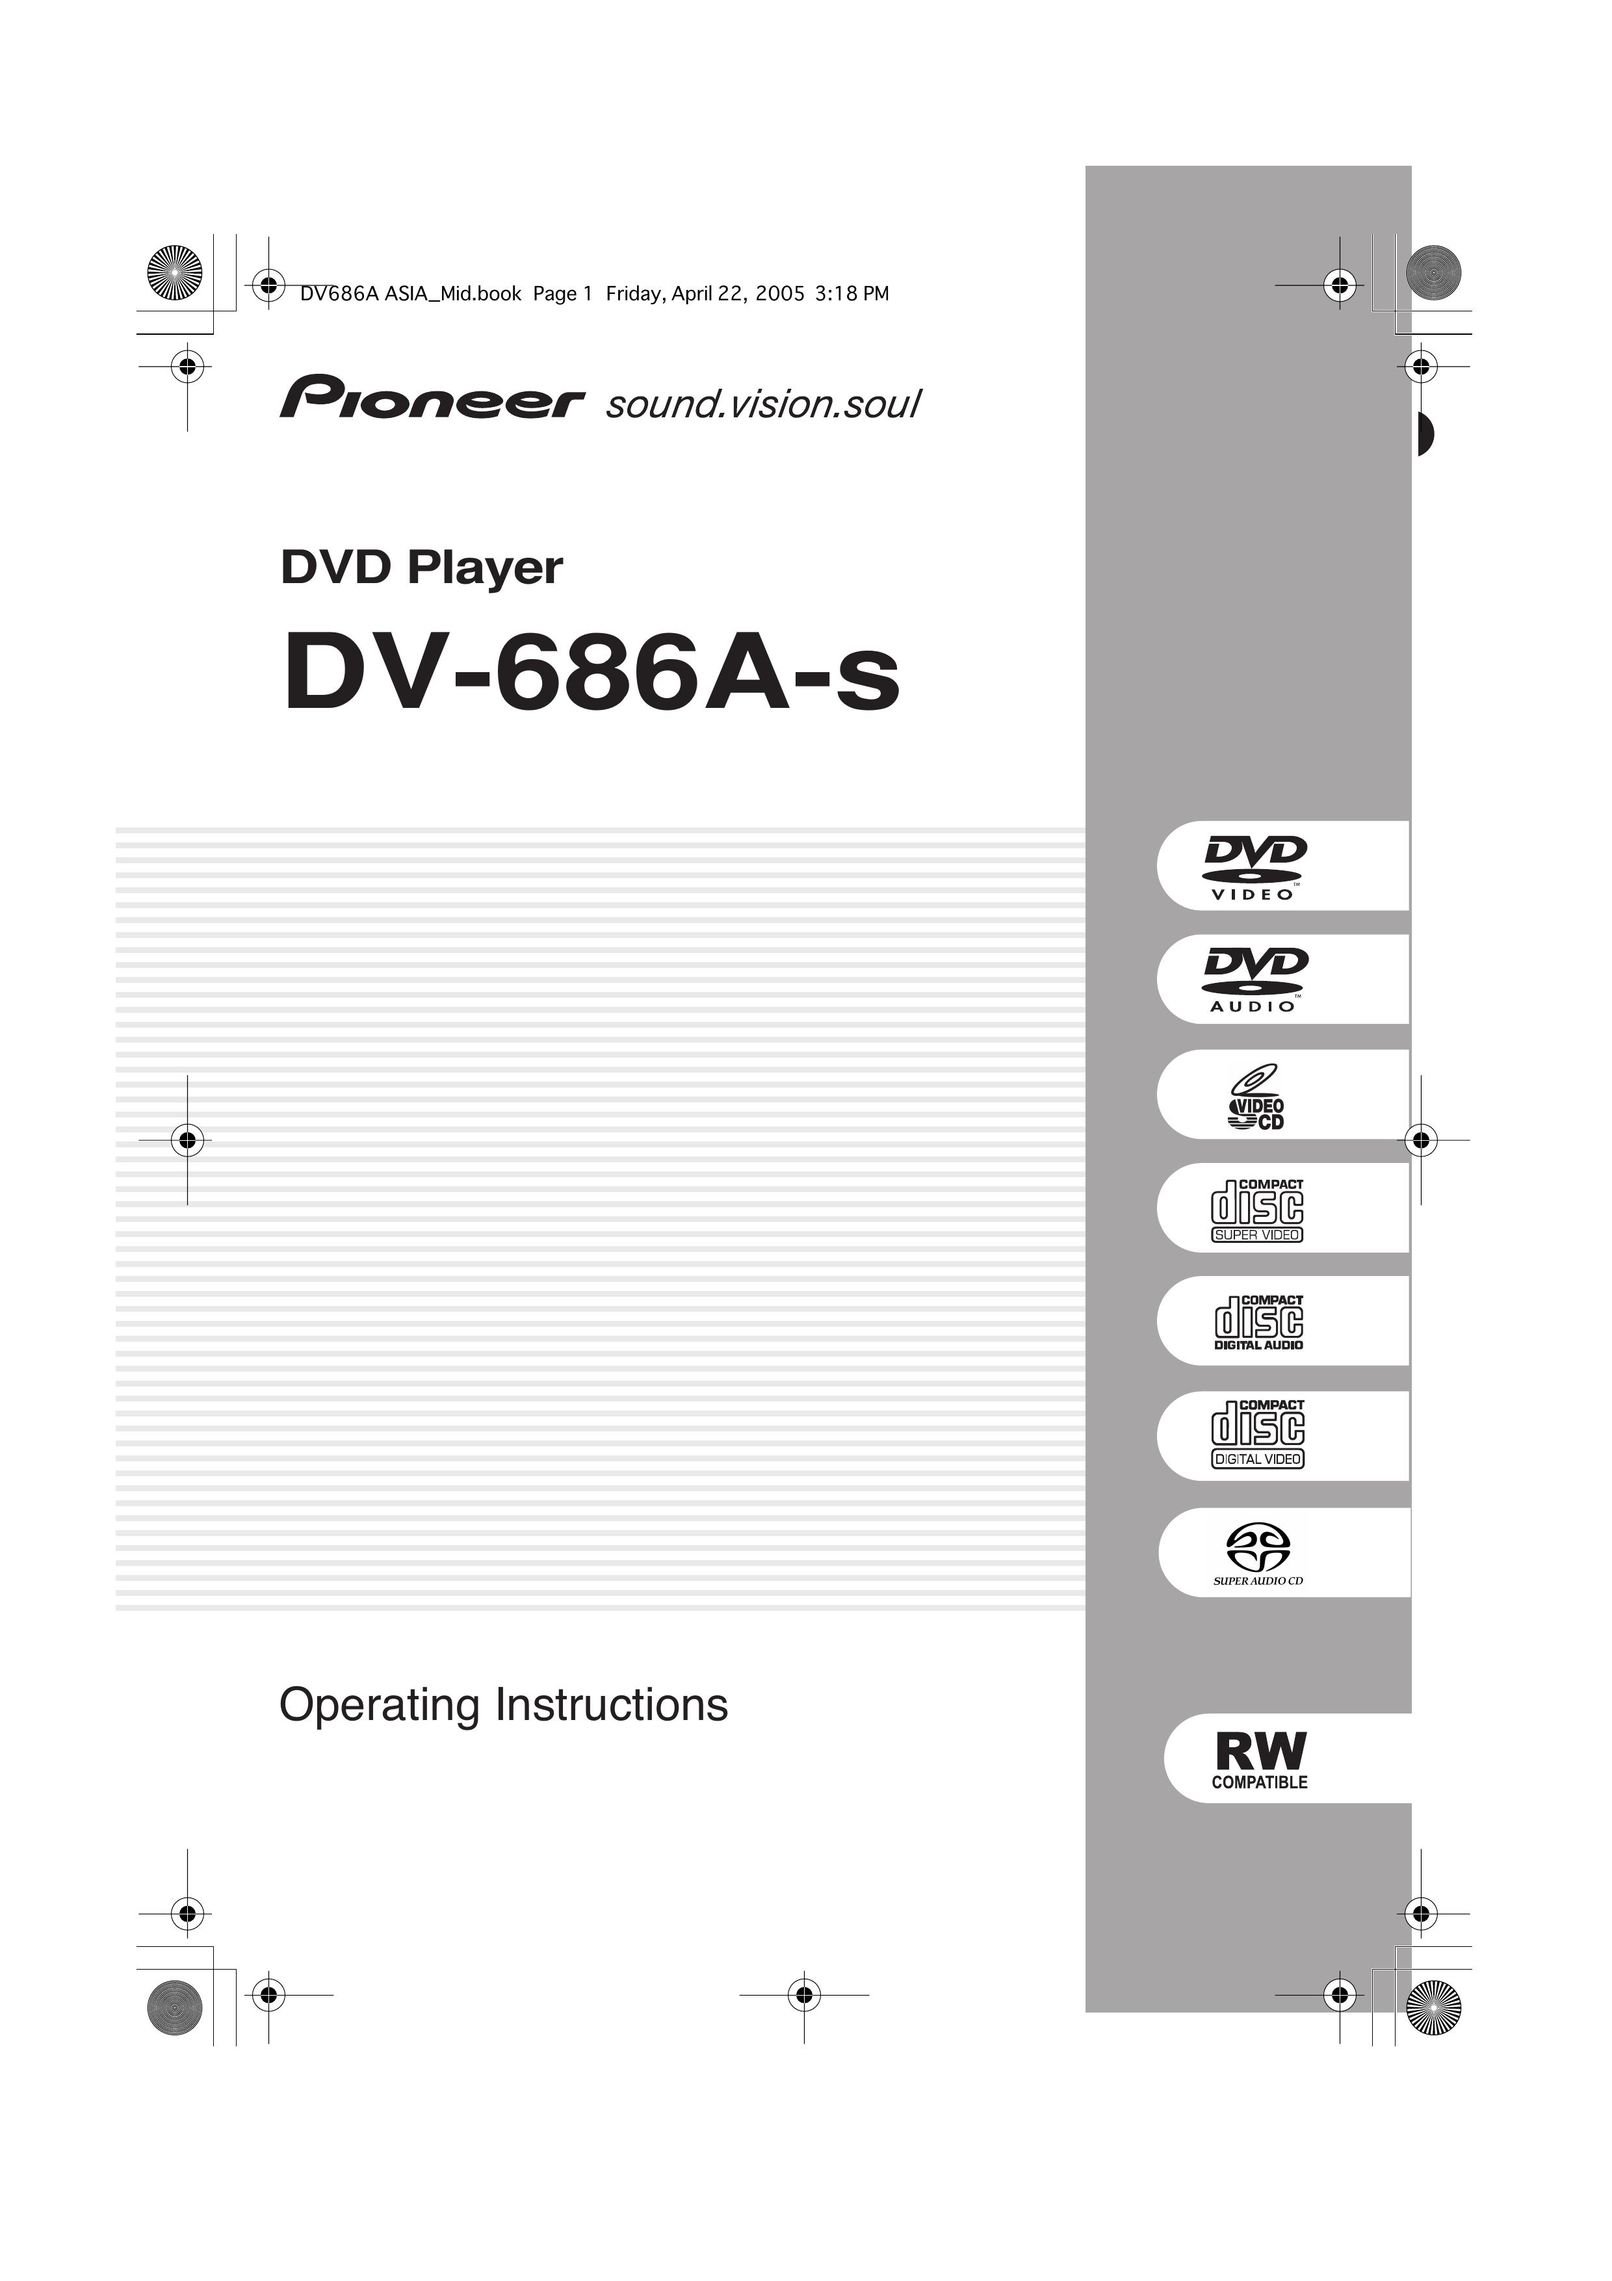 Panasonic DV-686A-s DVD Player User Manual